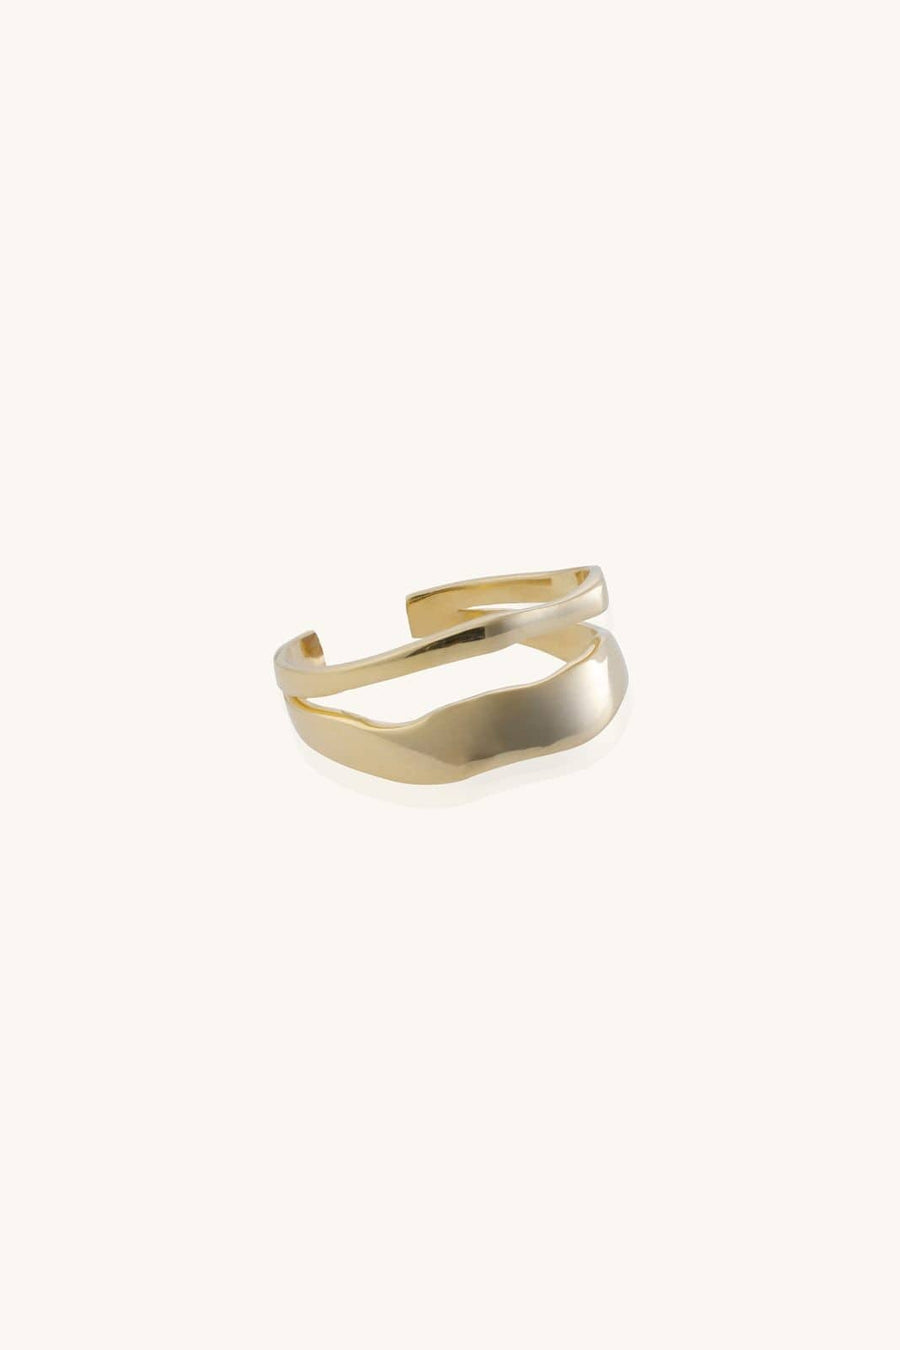 Svelte, Double Band Ring, Jewelry, Fashion, Accessories, Minimalist, Modern.